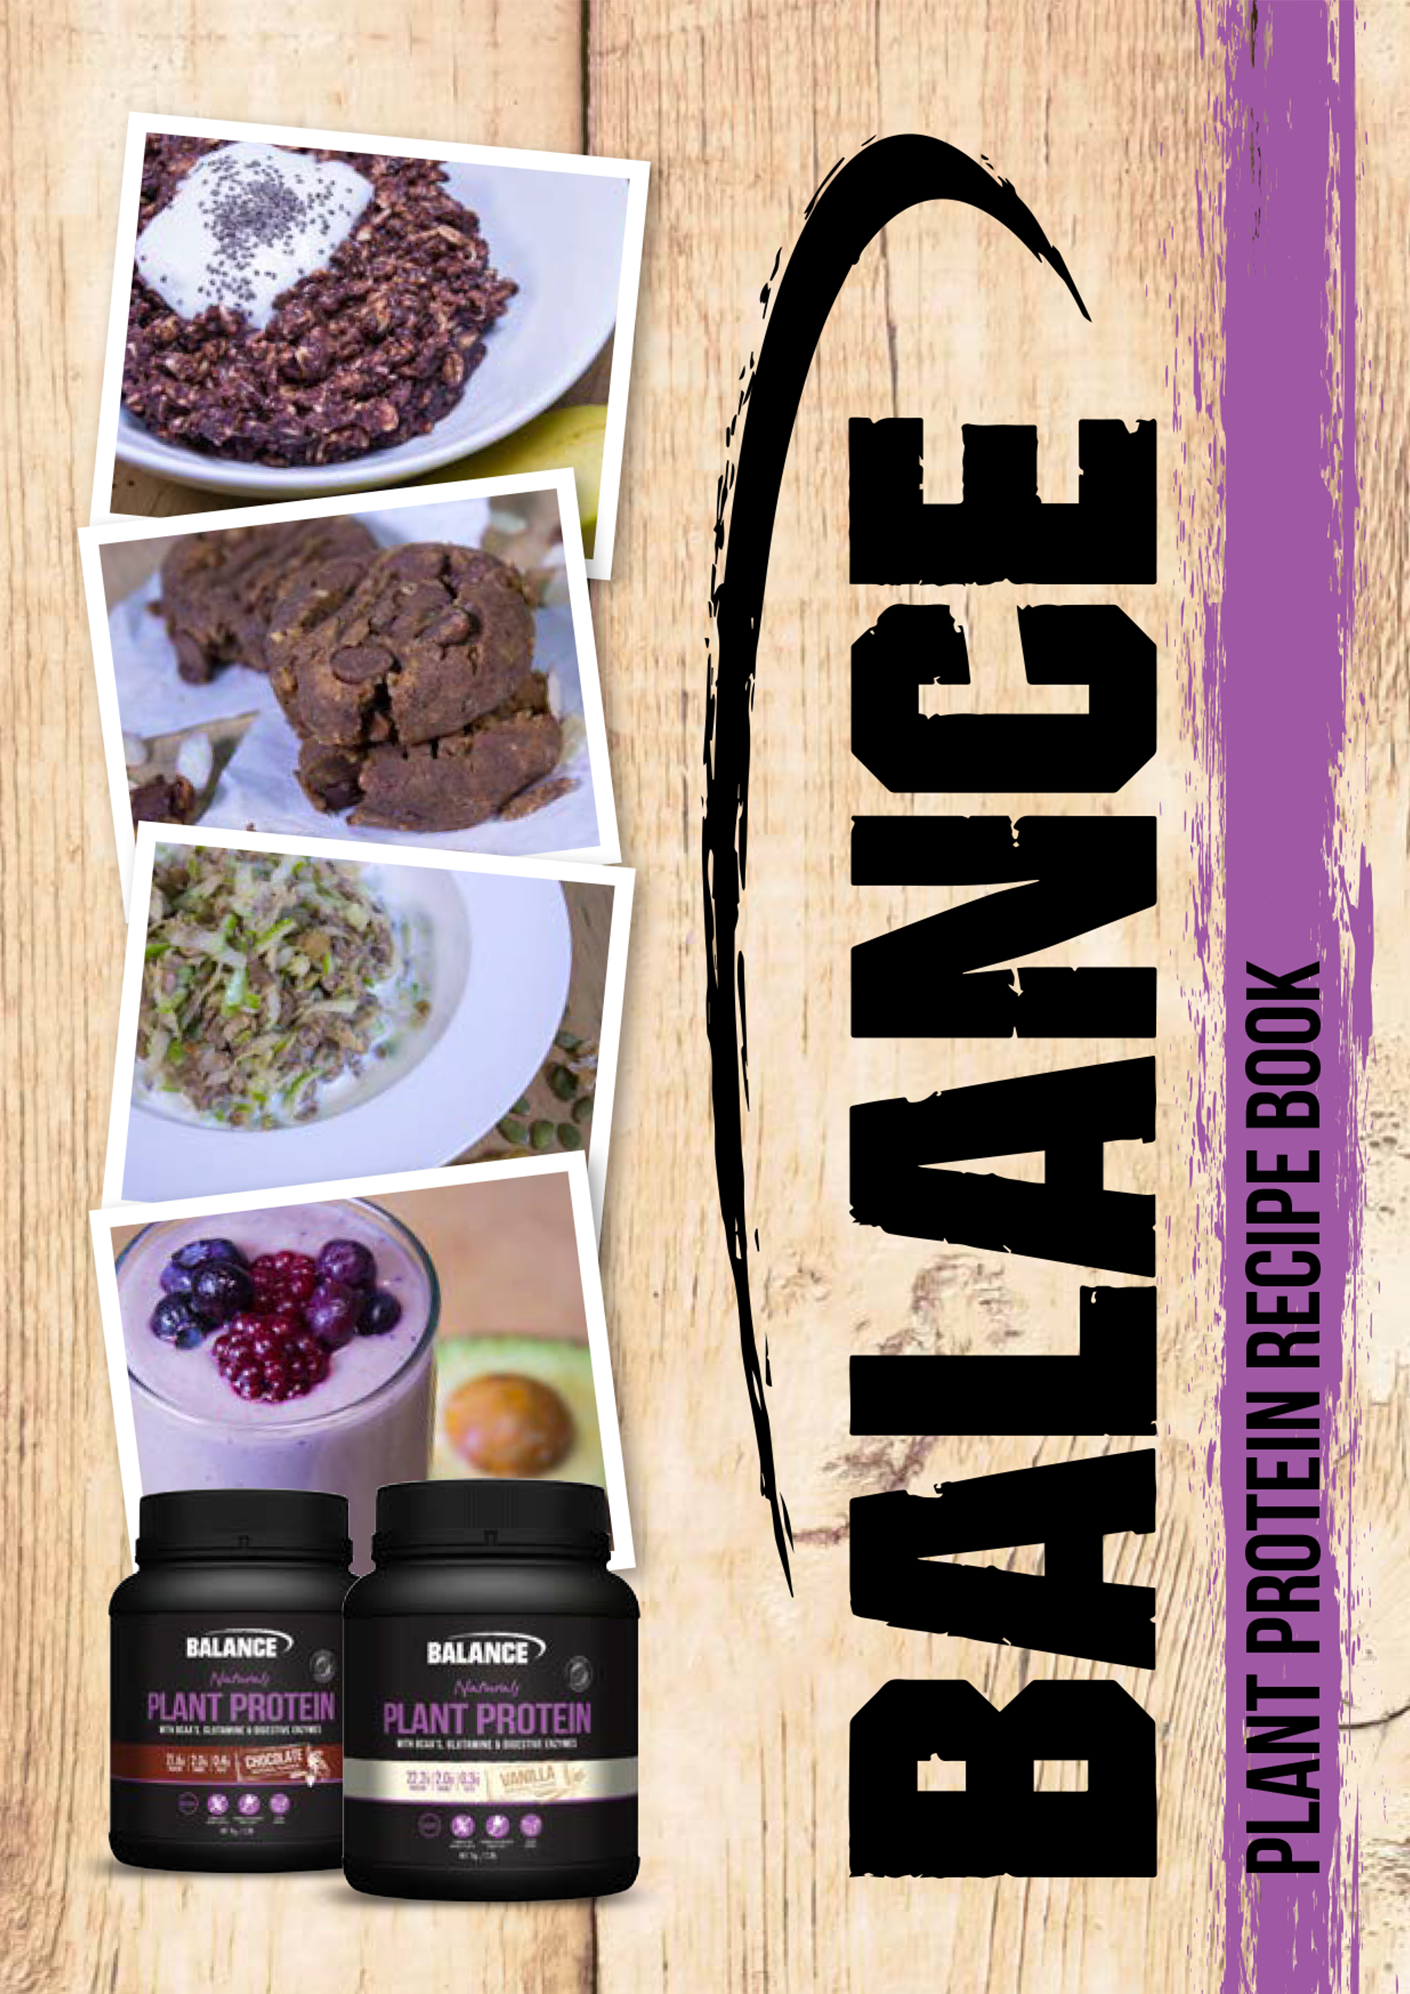 Balance Plant Protein Recipe Book